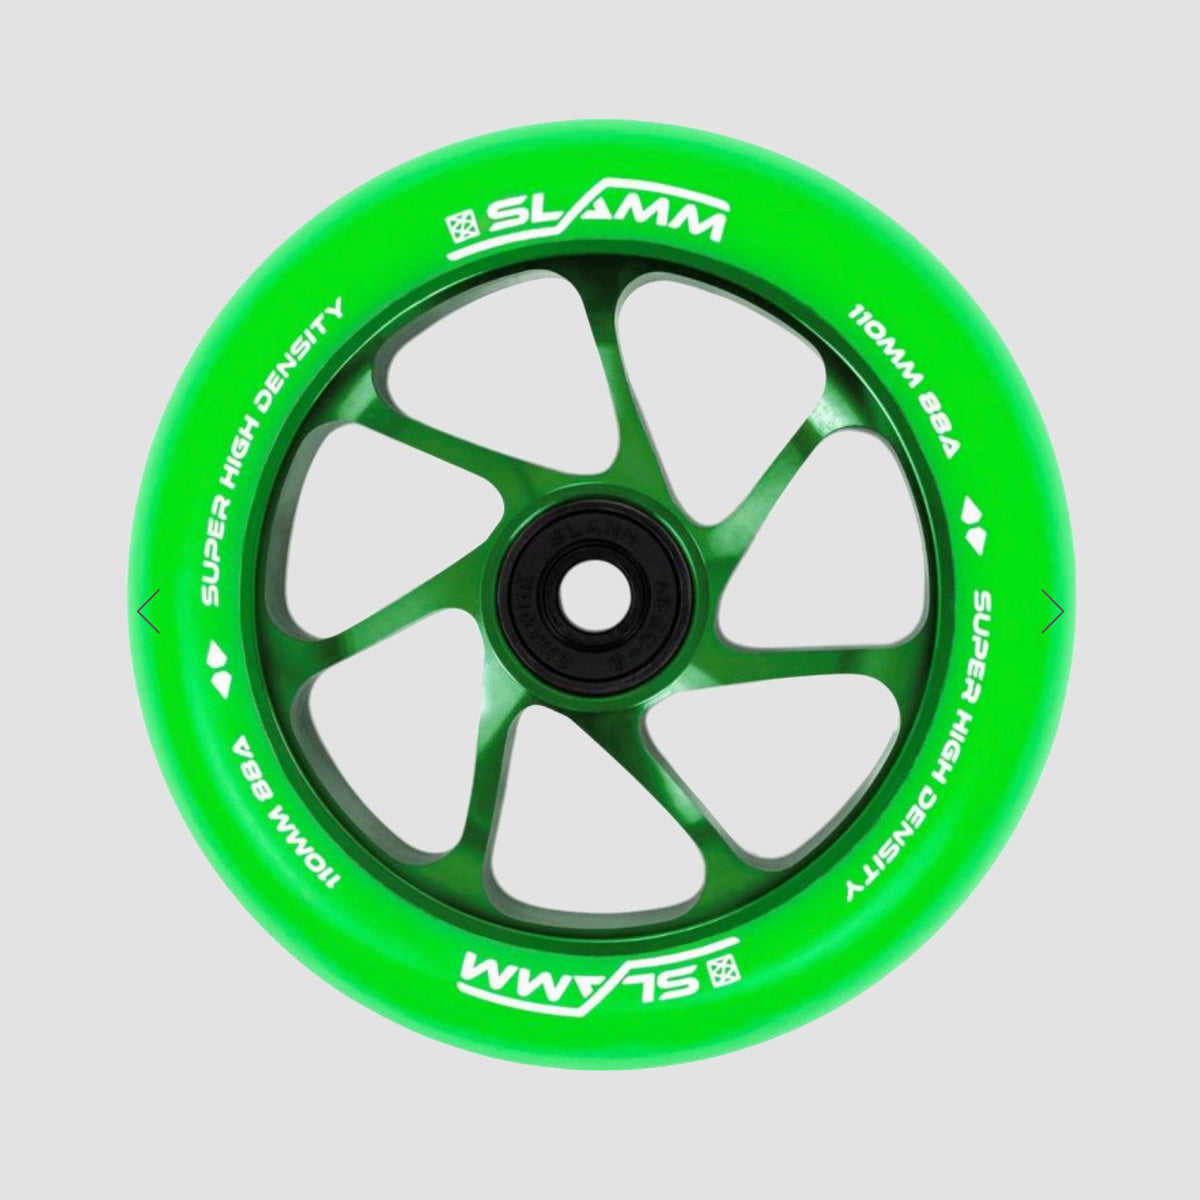 Slamm Team Wheel x1 Green/Green 110mm